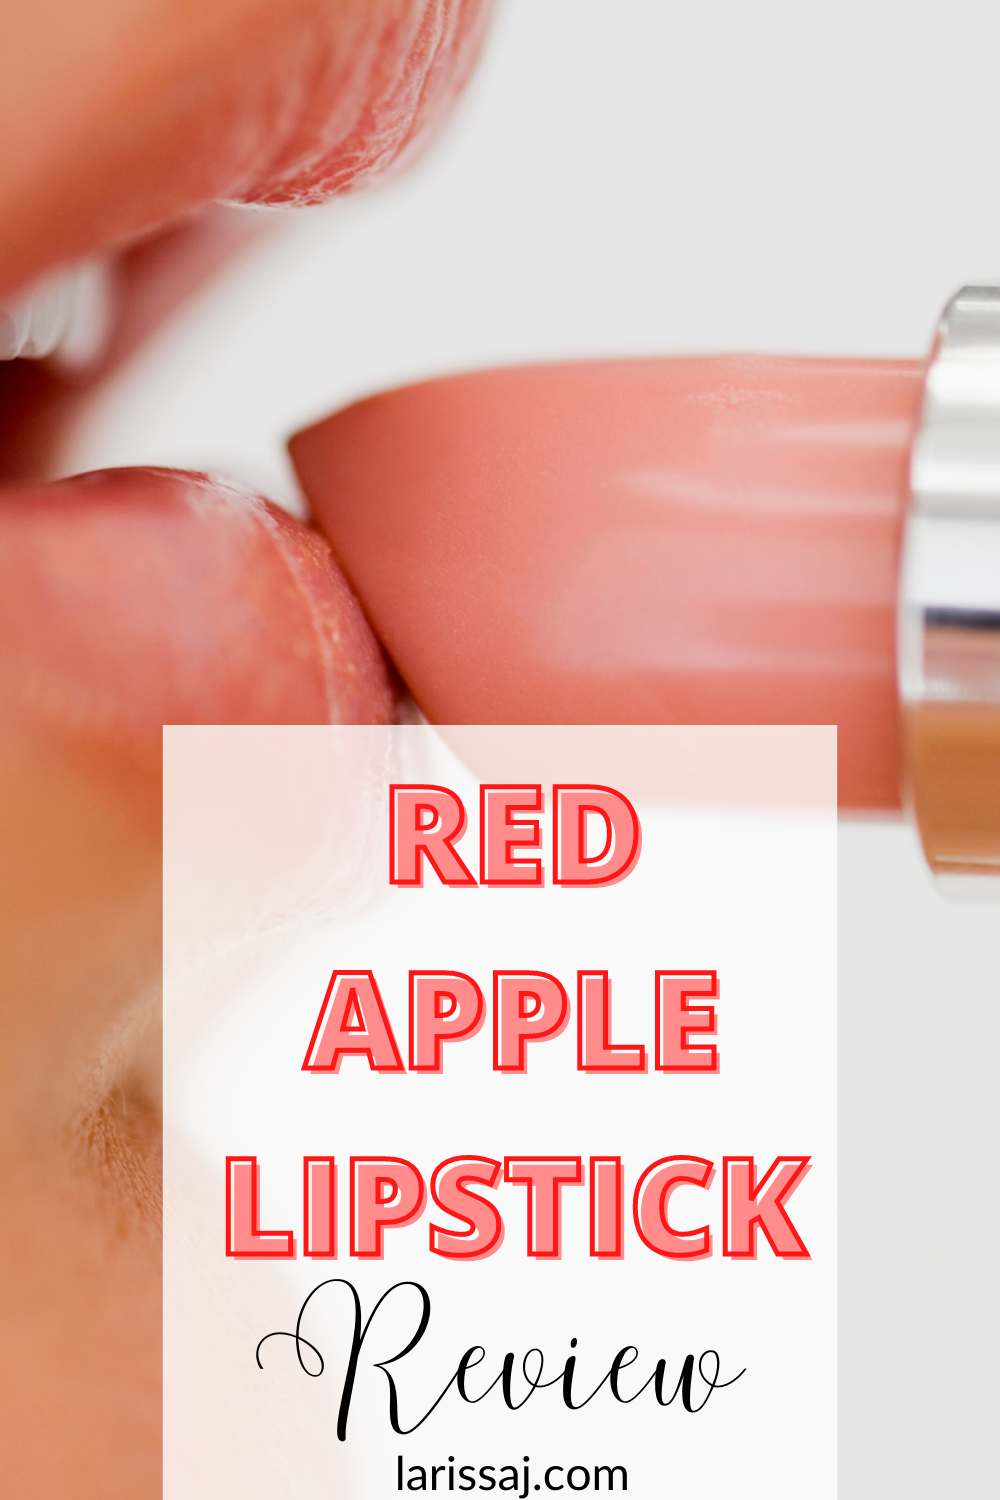 Red Apple Lipstick non toxic lipstick clean beauty